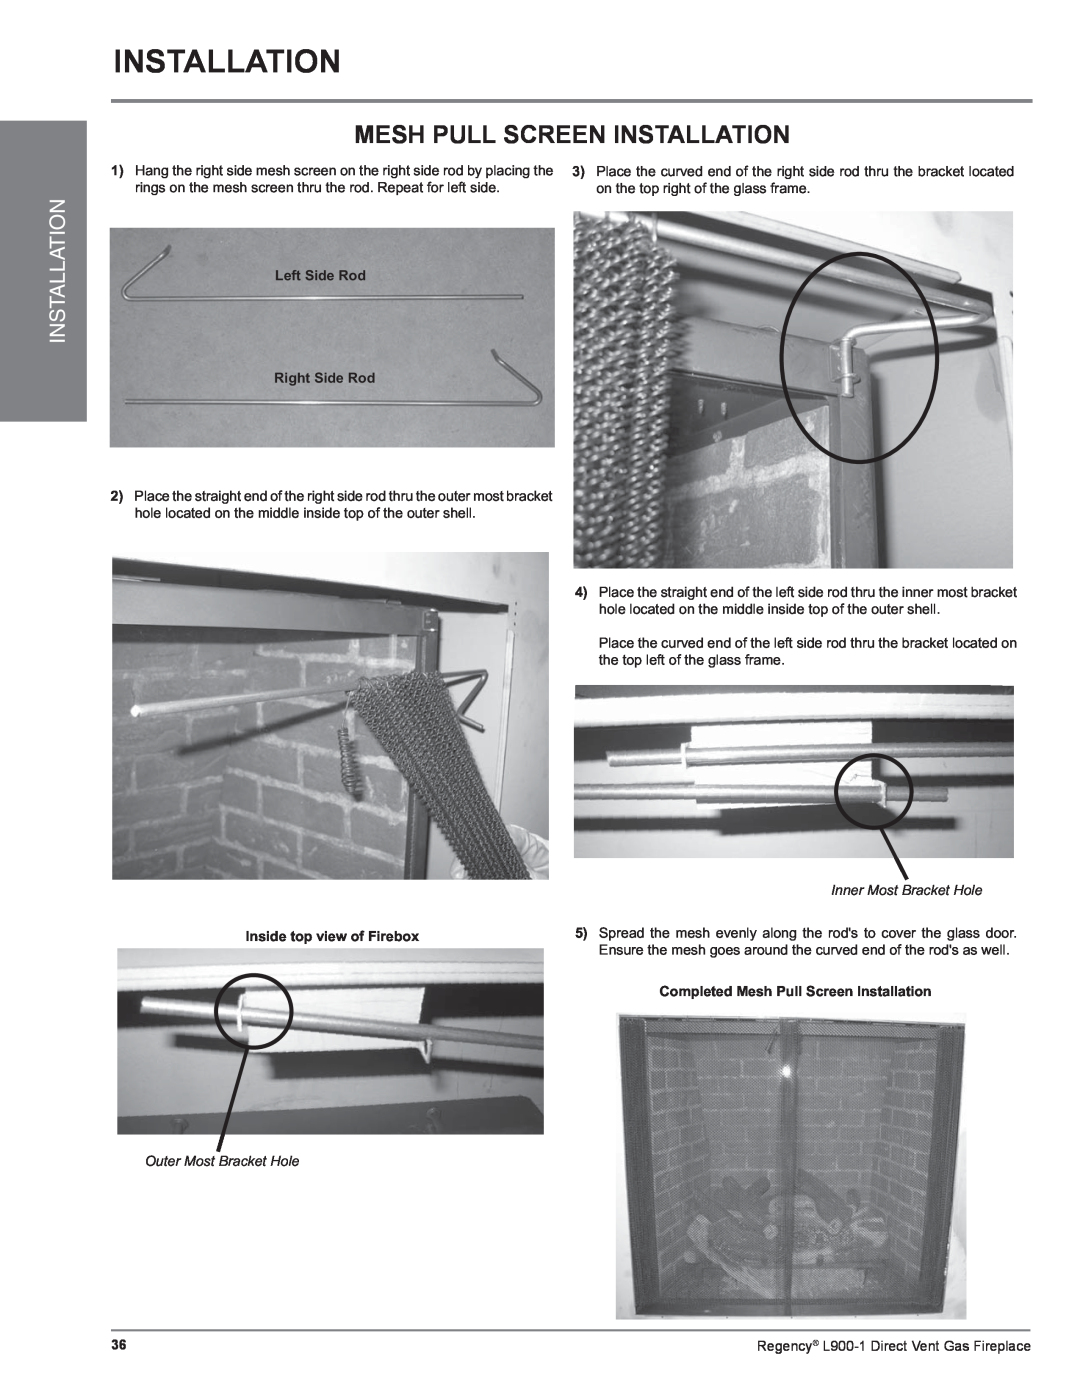 Regency L900-1 installation manual Mesh Pull Screen Installation, Left Side Rod Right Side Rod, Inner Most Bracket Hole 